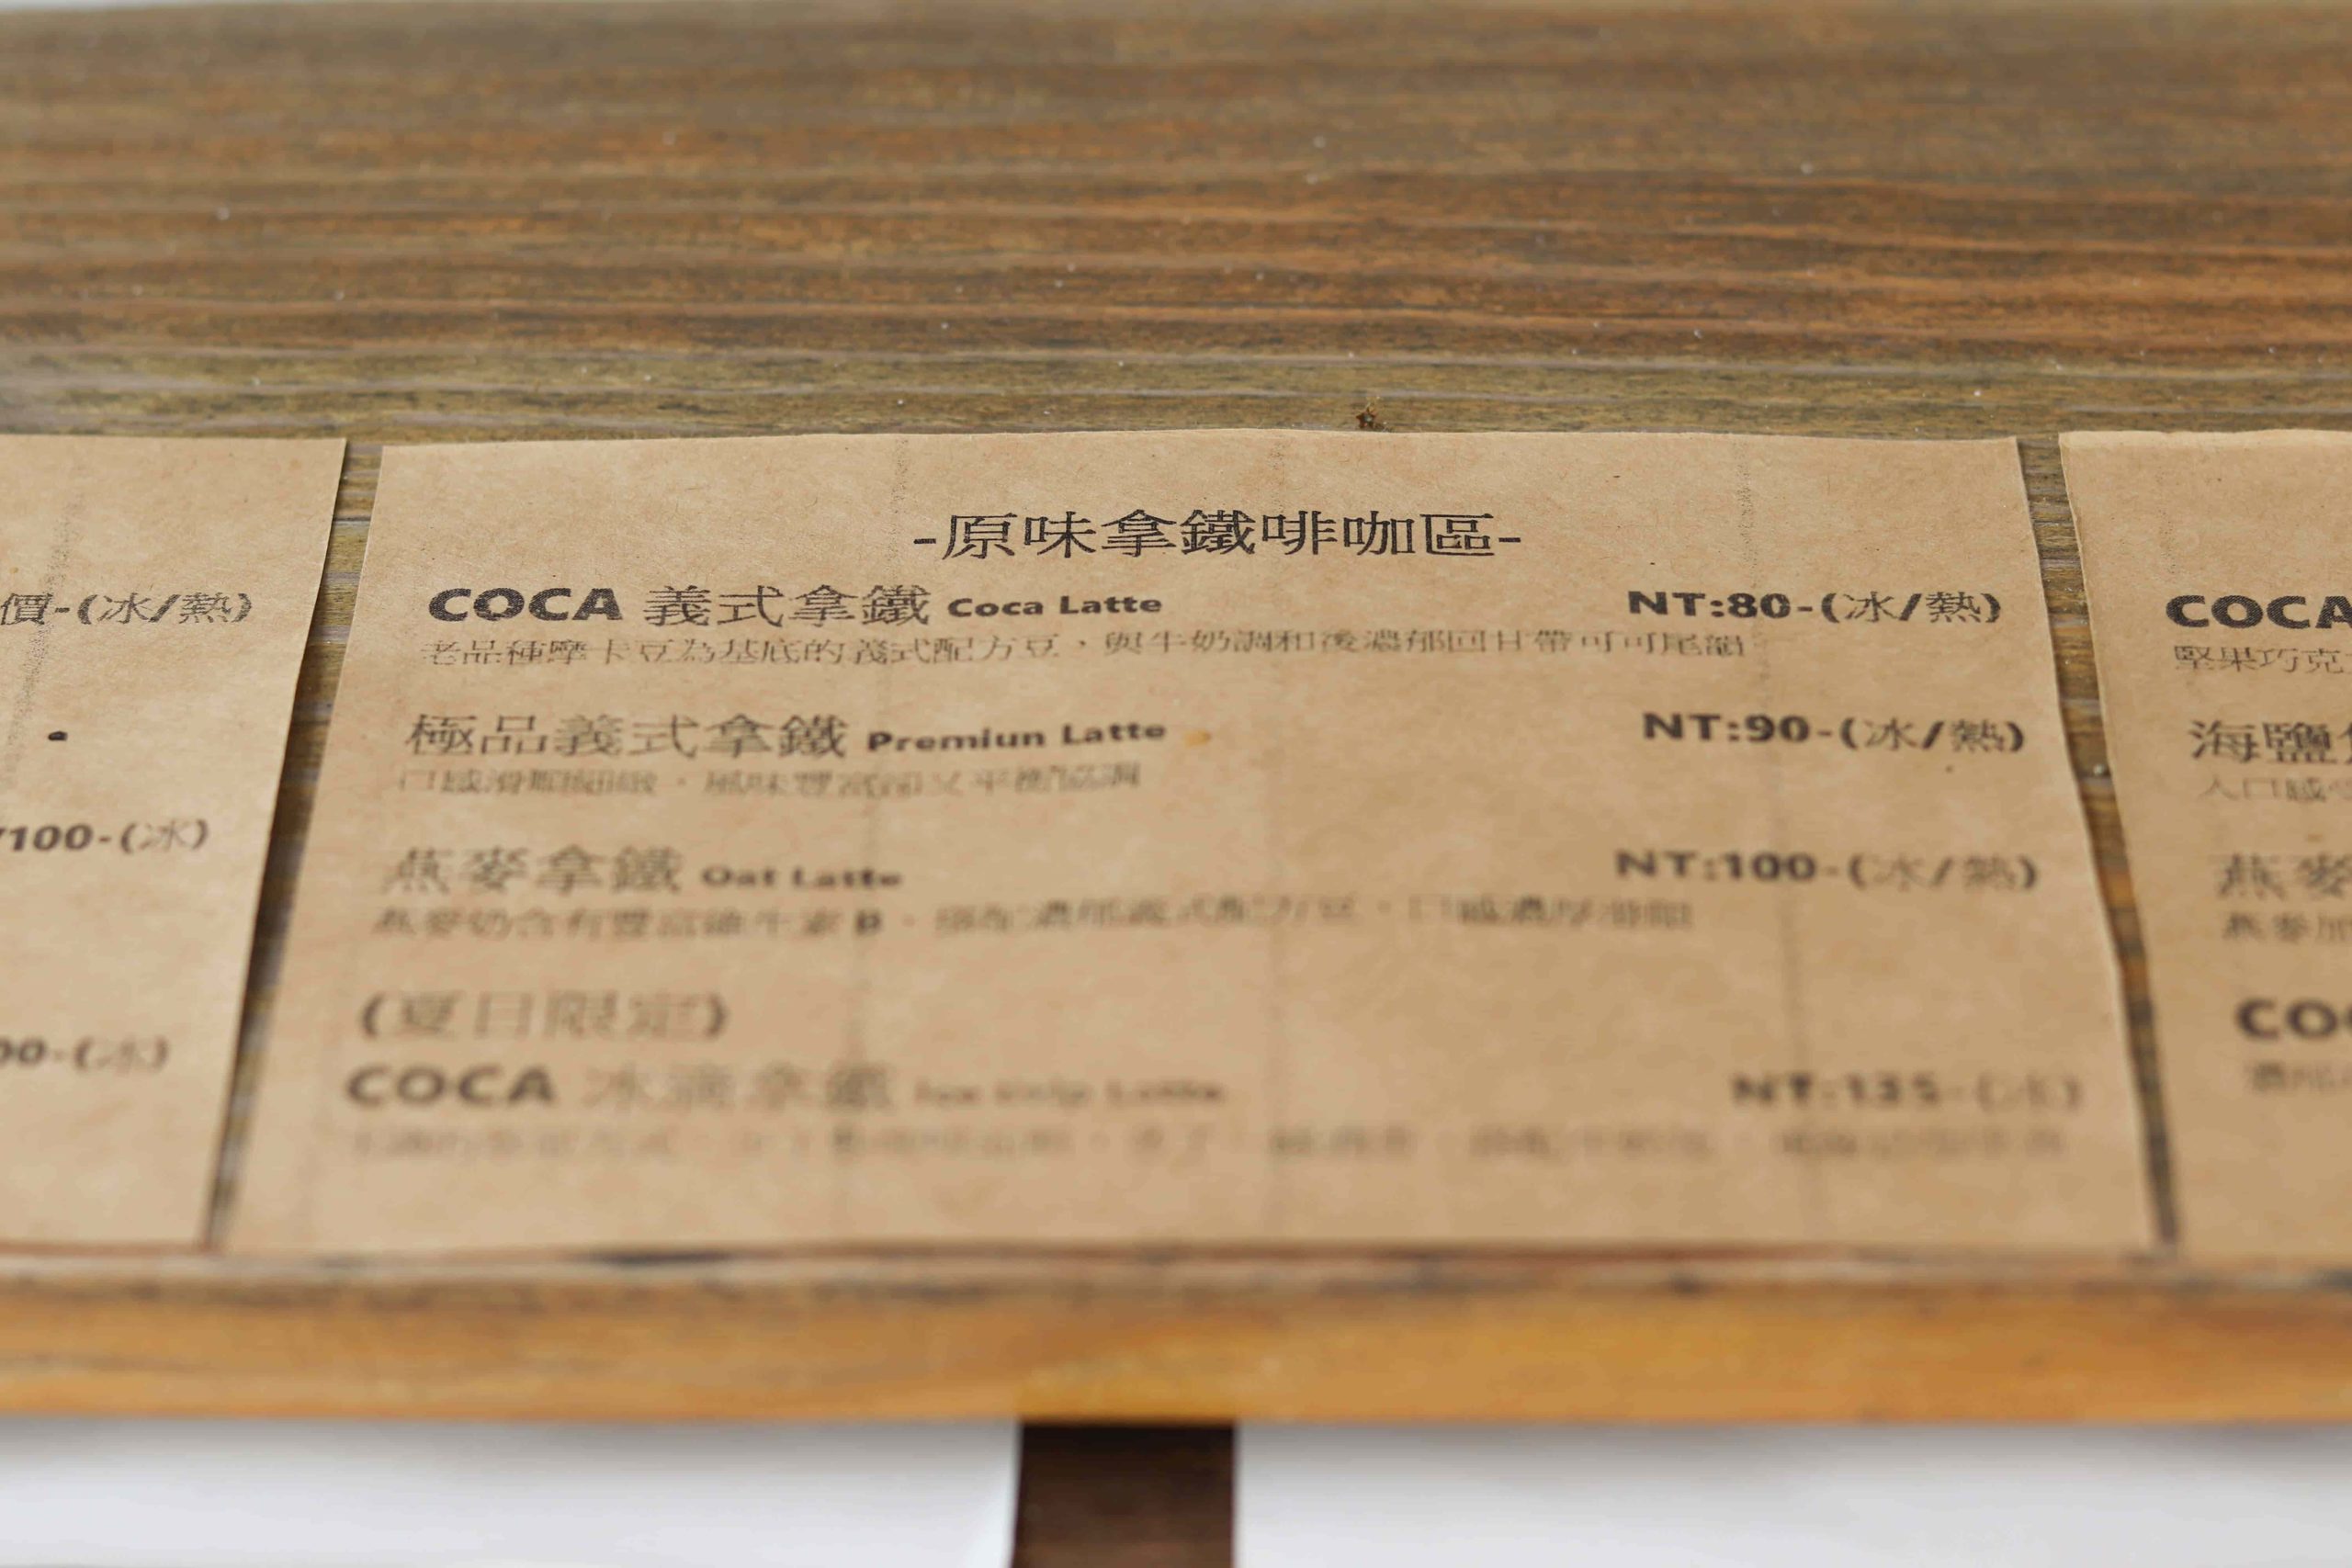 COCA COFFEE 渴口手沖咖啡menu